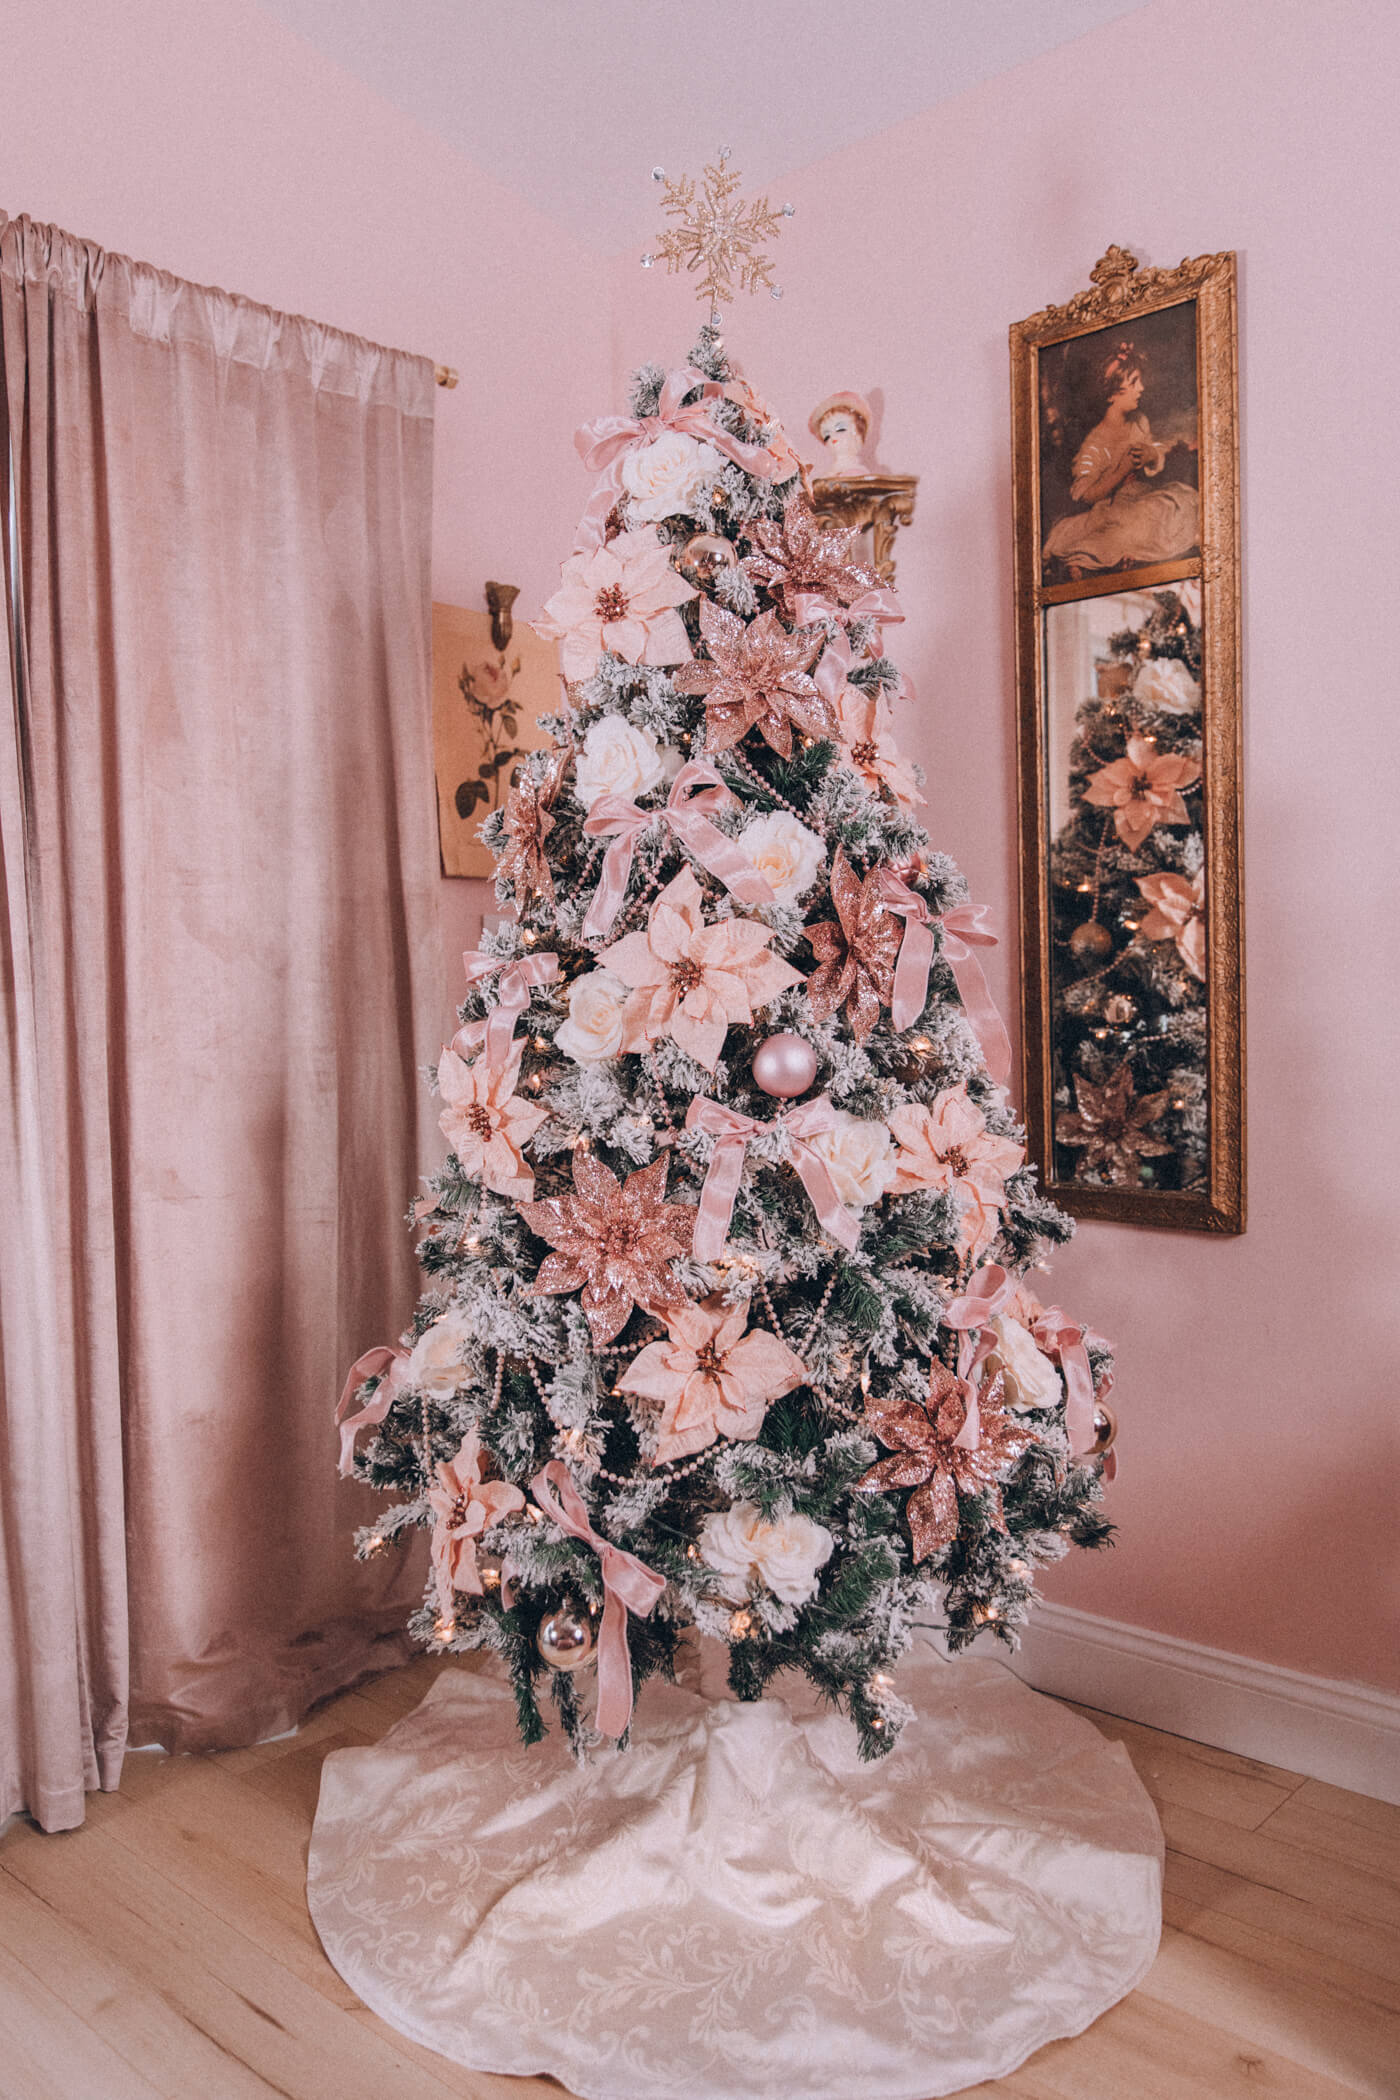 Keiko Lynn's soft pink christmas decor